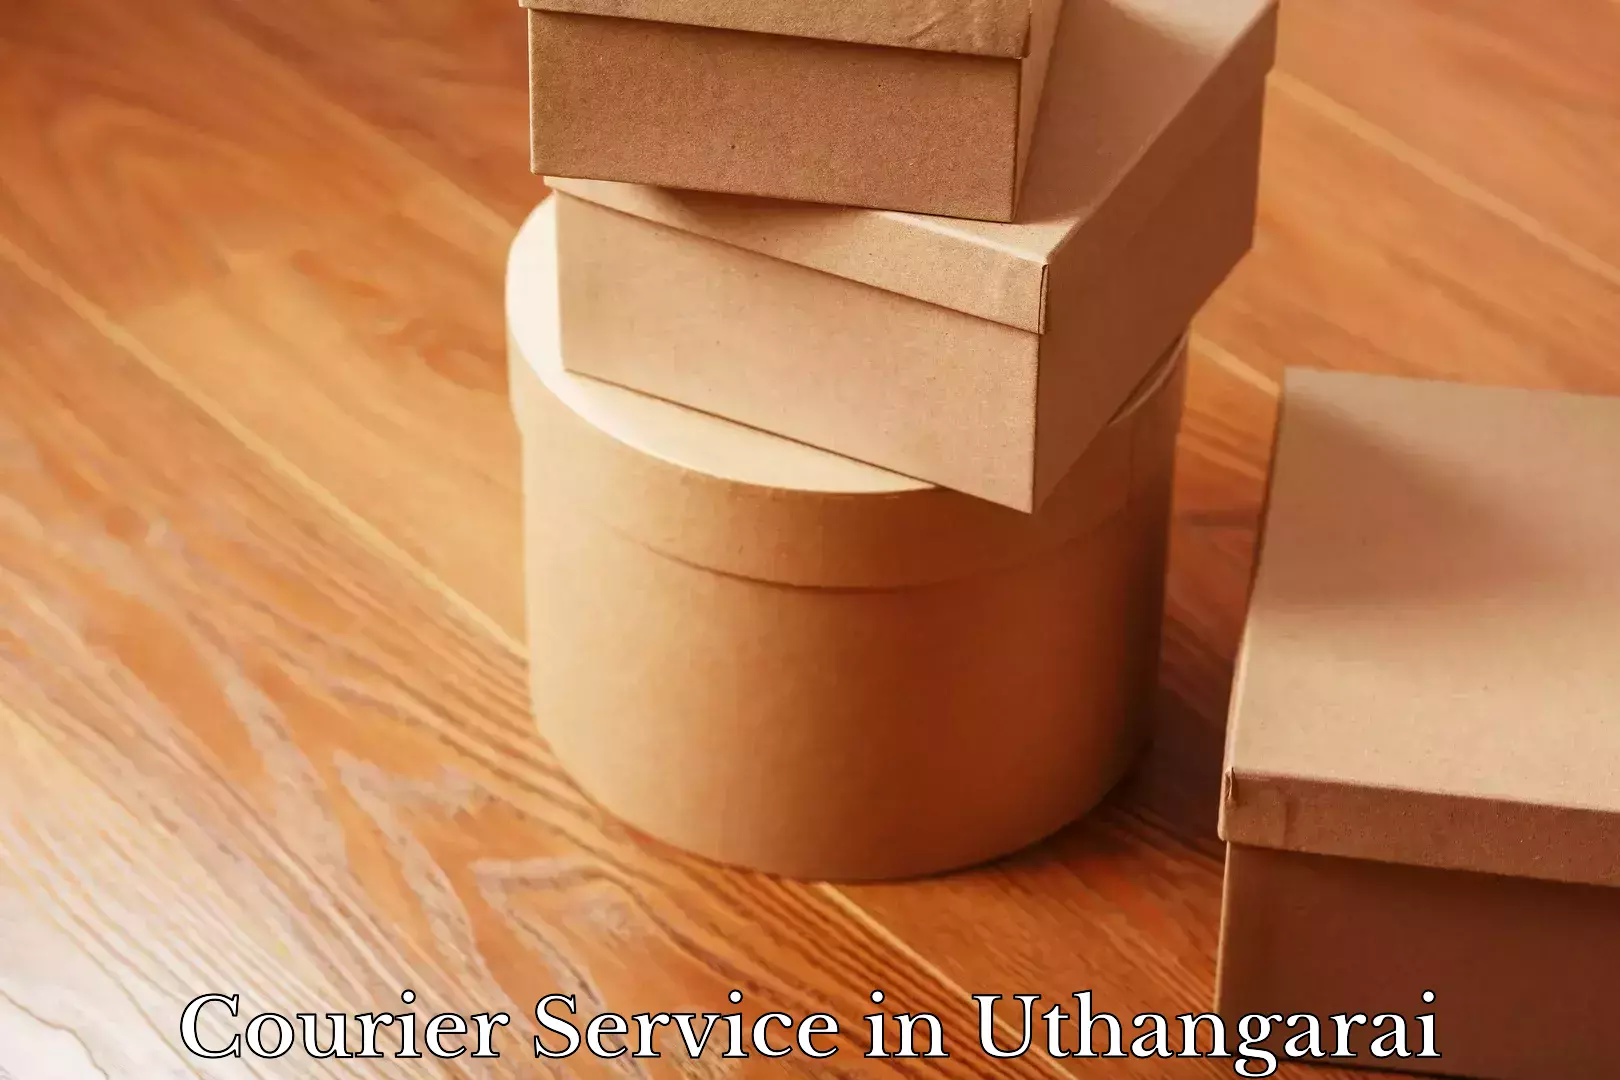 Comprehensive logistics solutions in Uthangarai